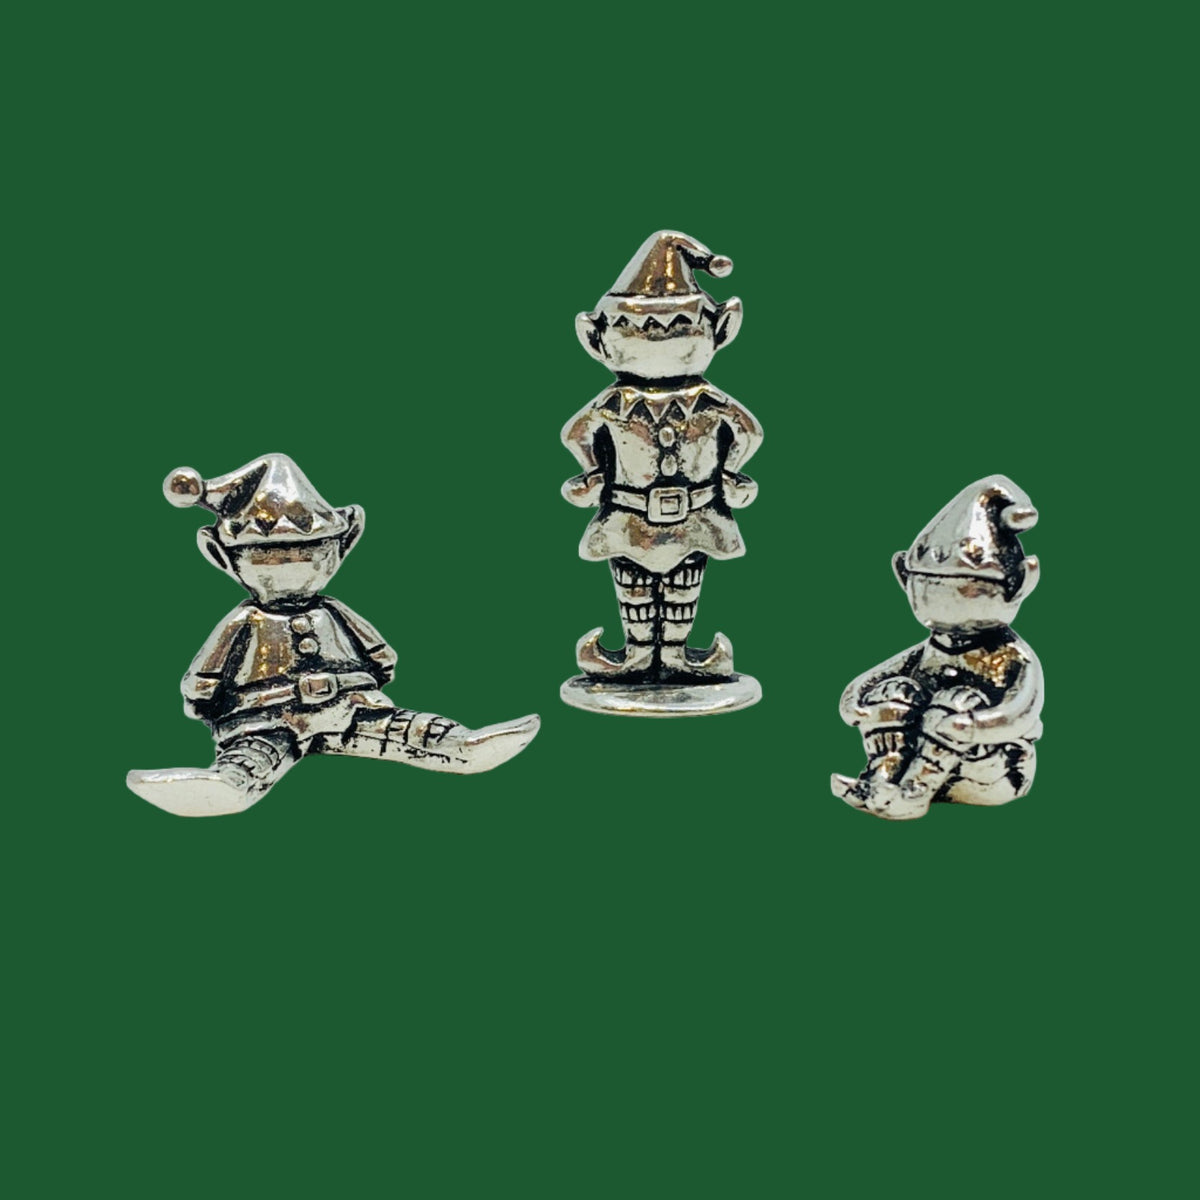 Miniature 3pc. Pewter Pocket Elves Set